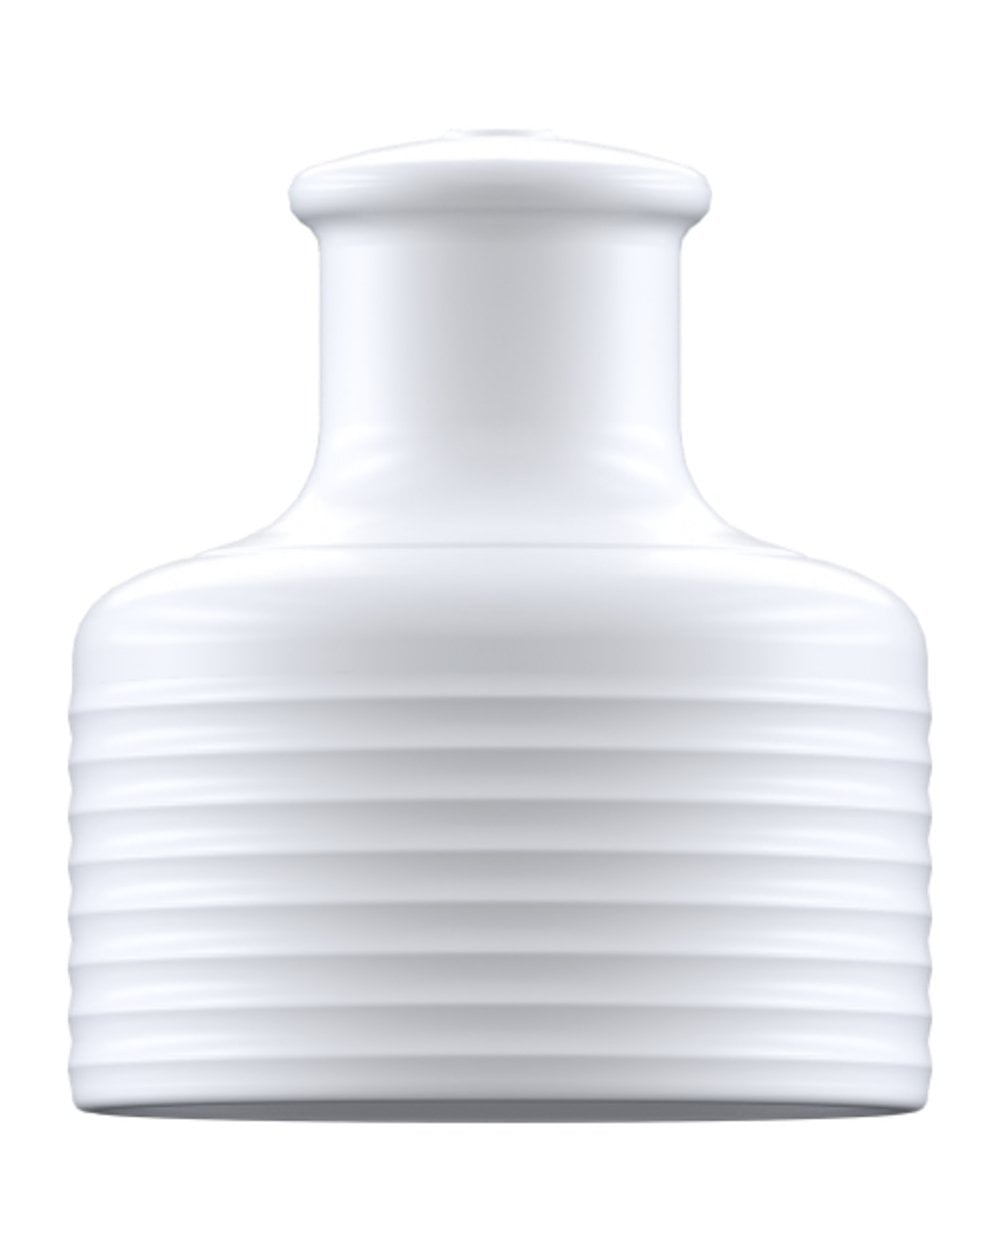 Monochrome White Sports Lid for 260ml/500ml Bottle